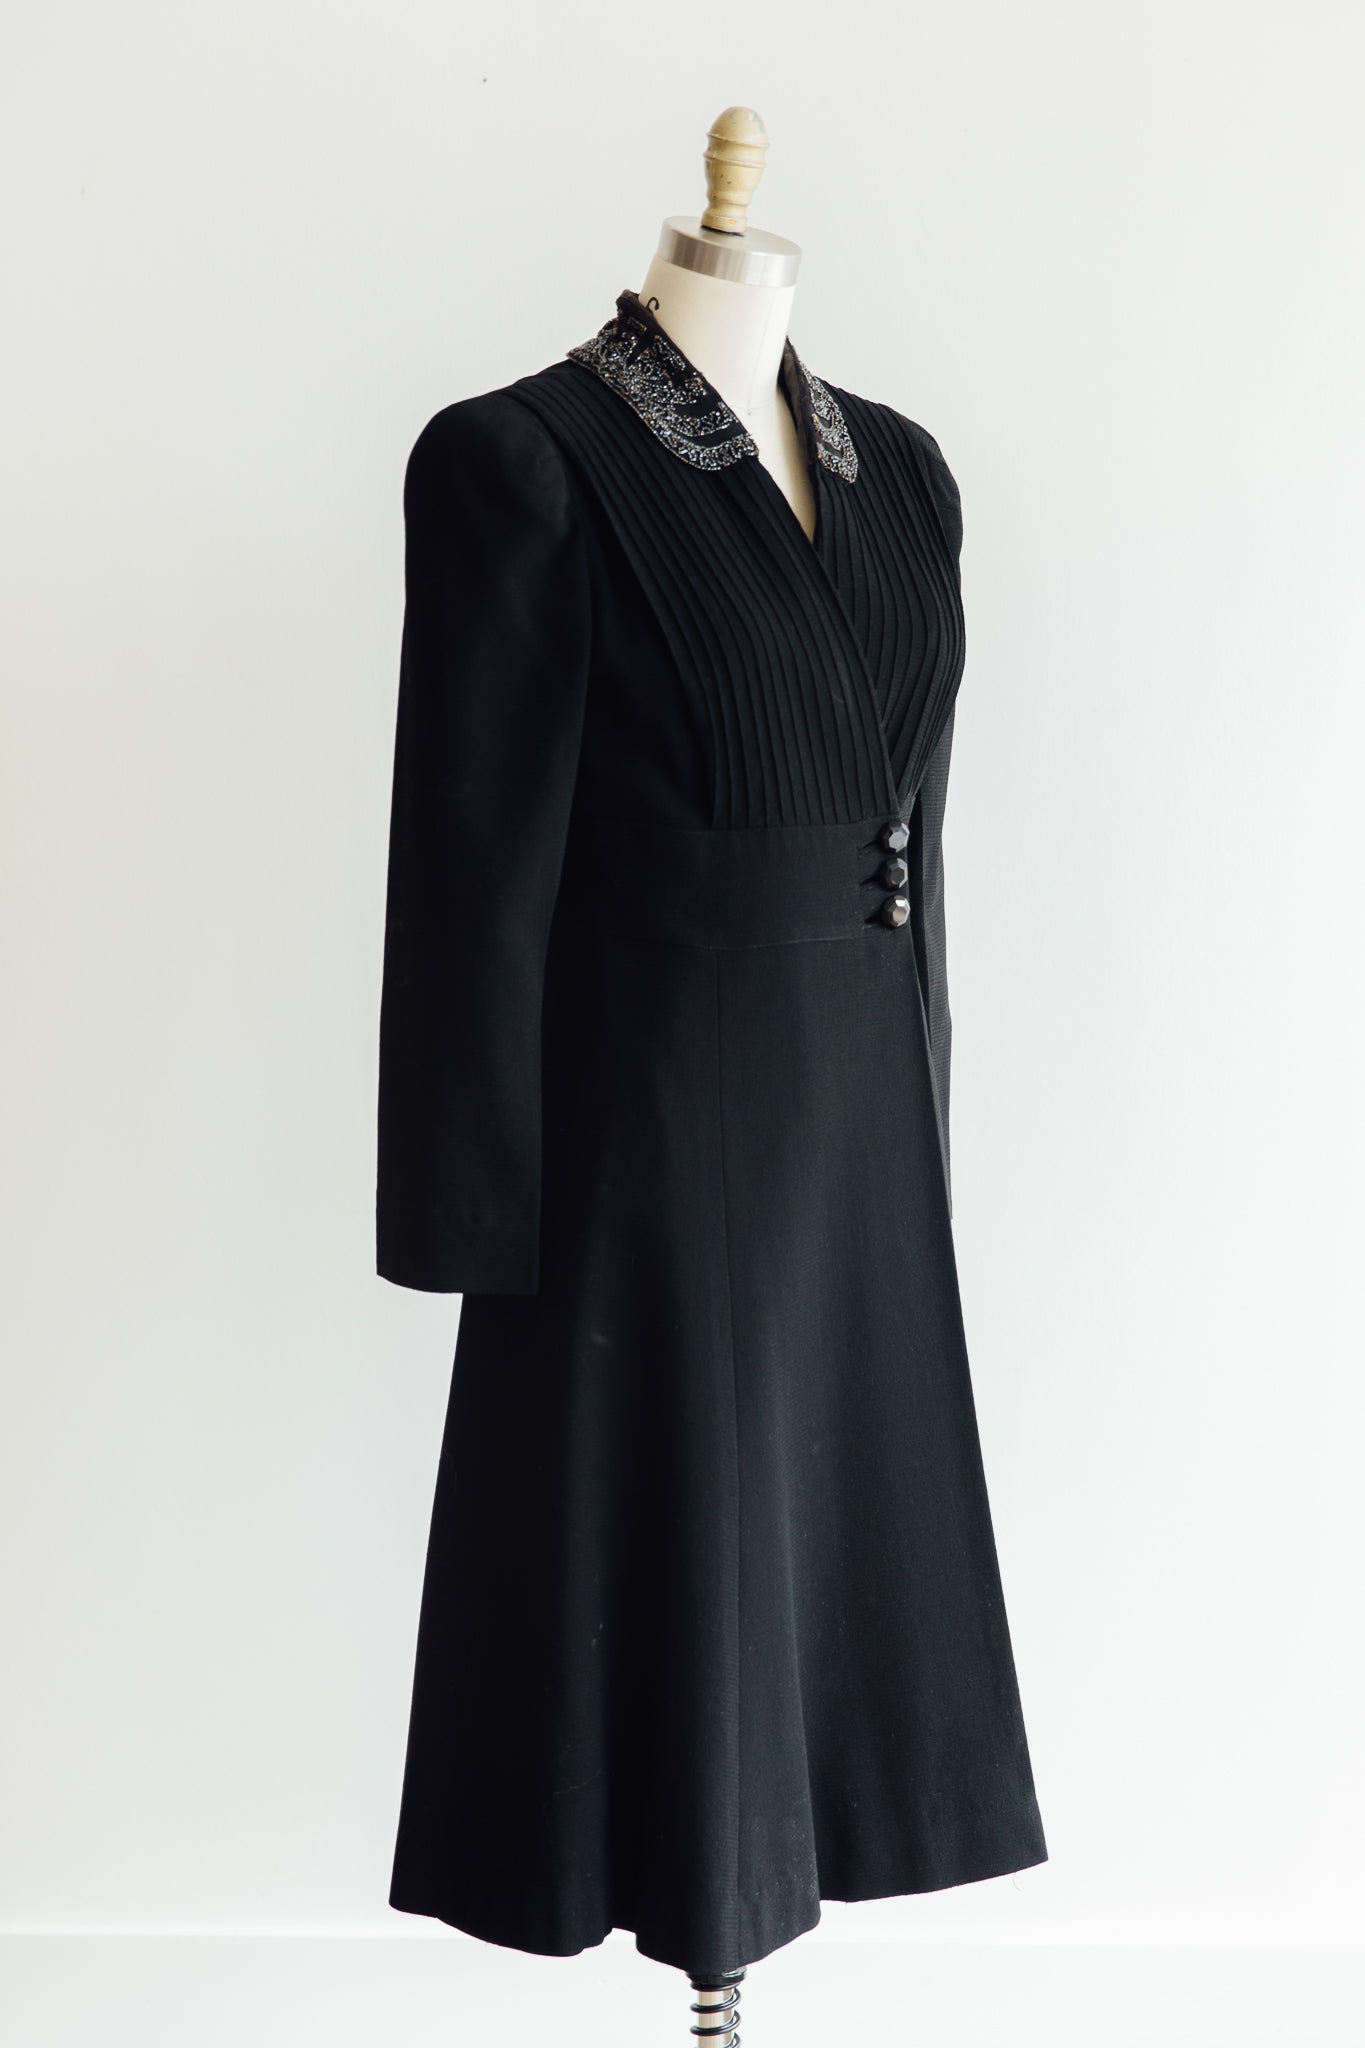 Hand-Beaded Black Embellished Collar Wrap Dress